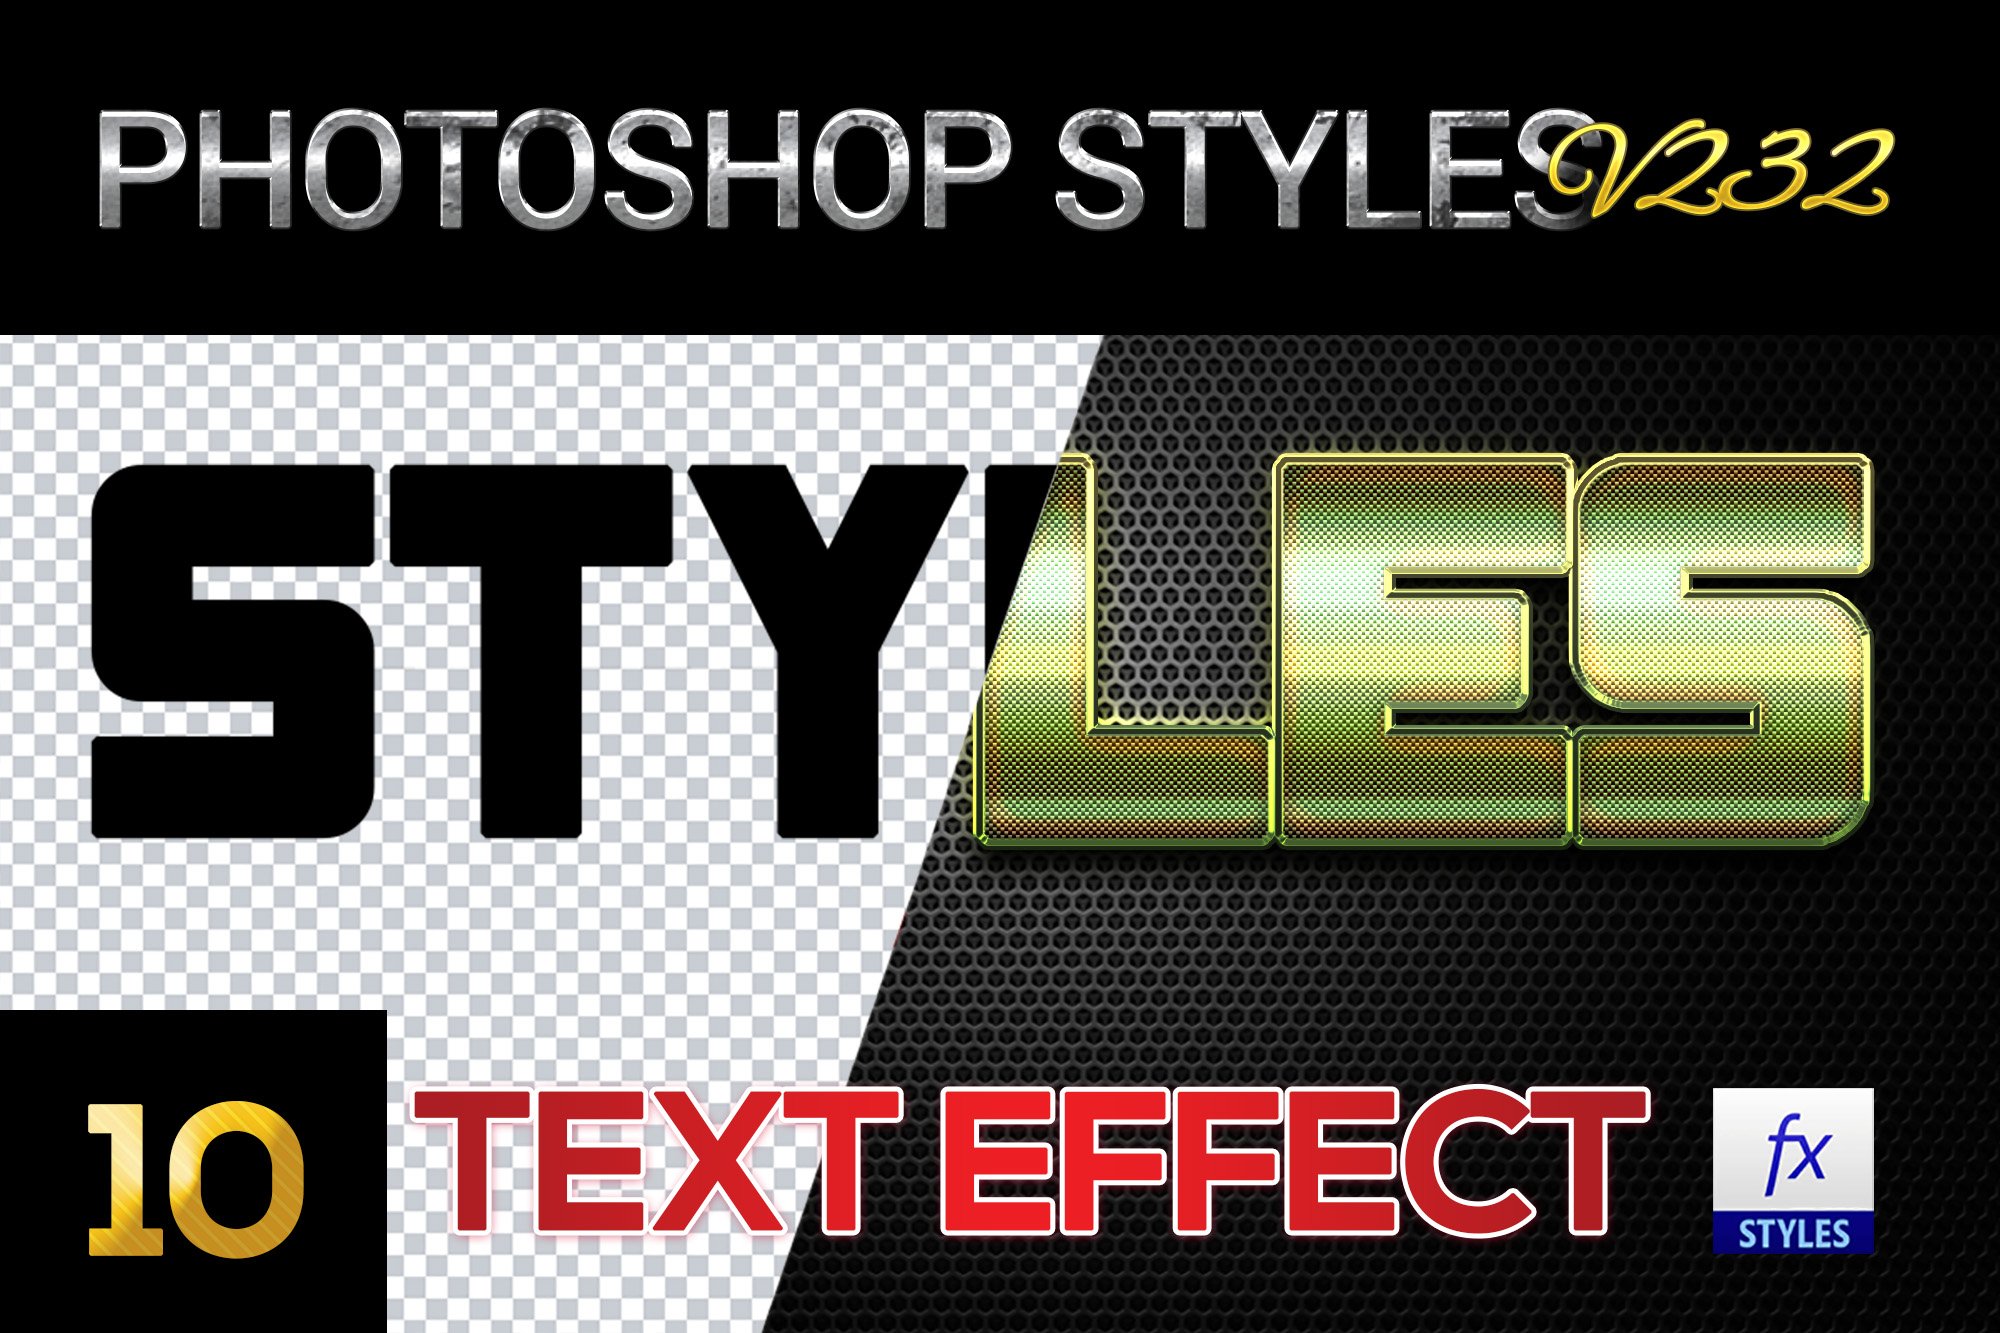 10 creative Photoshop Styles V232cover image.